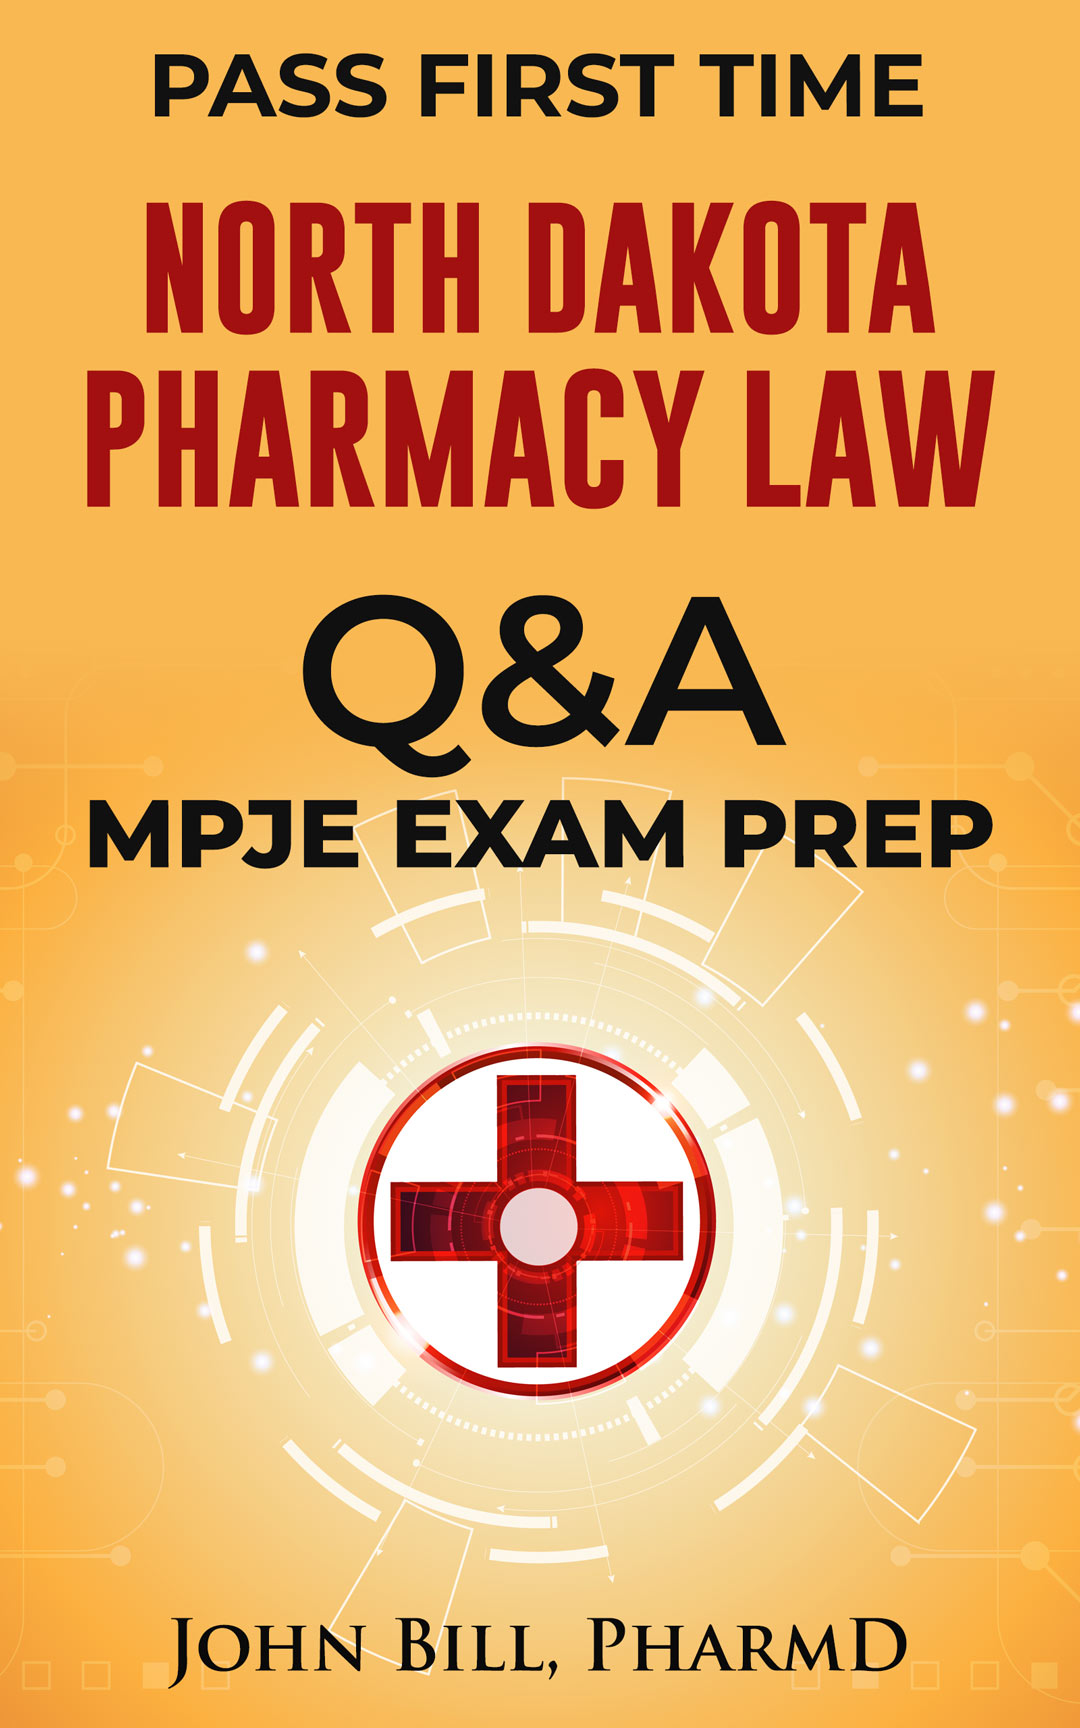 North Dakota Pharmacy Law MPJE Exam Prep Q & A